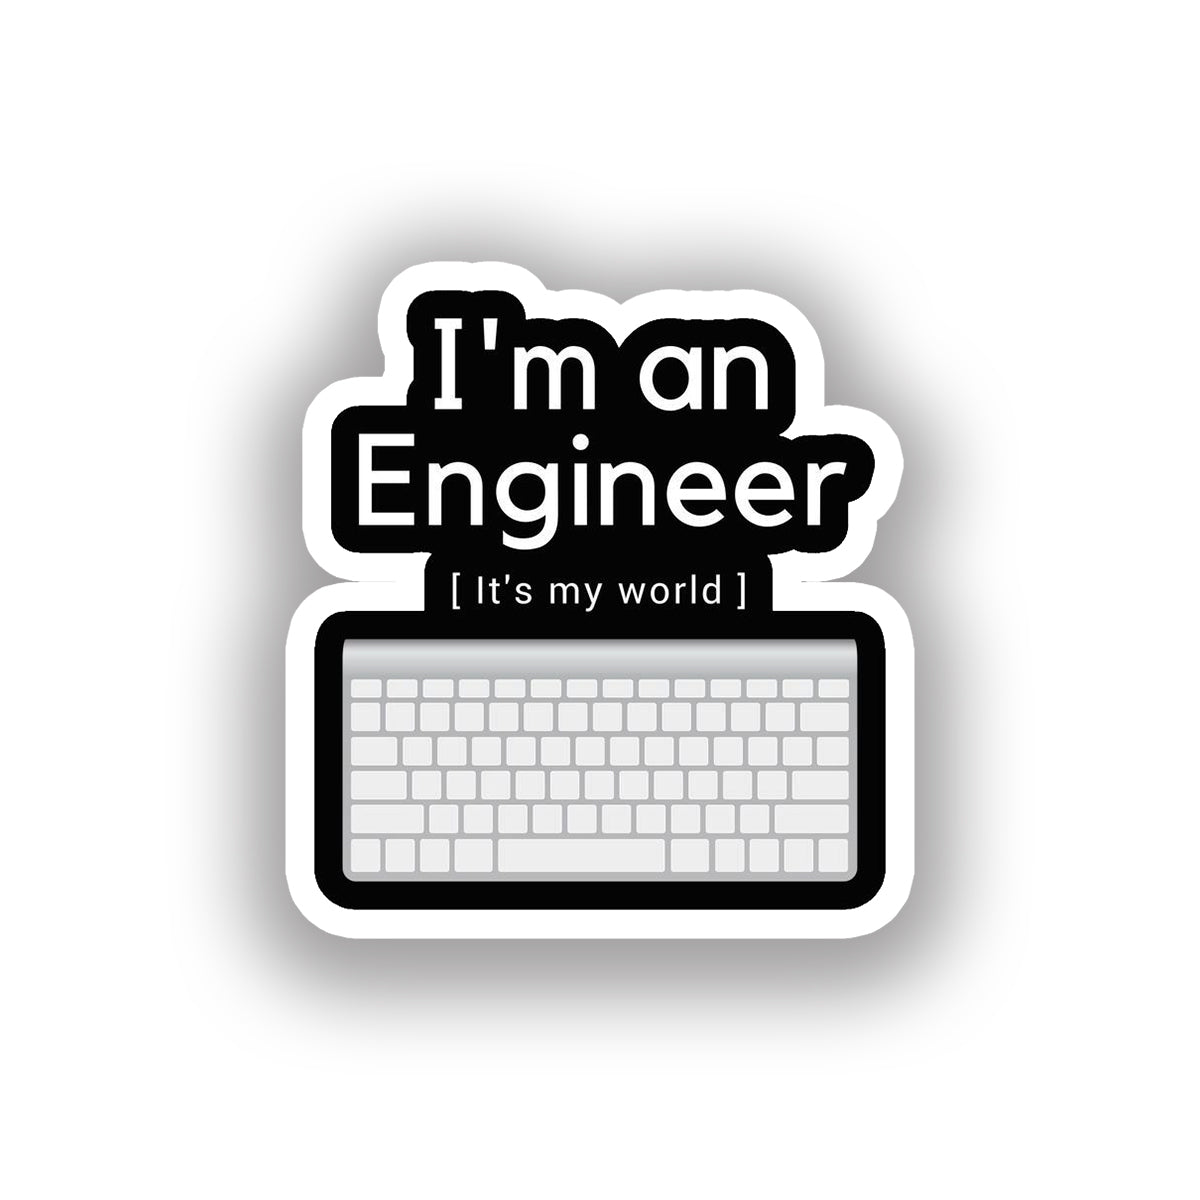 i'm an Engineer